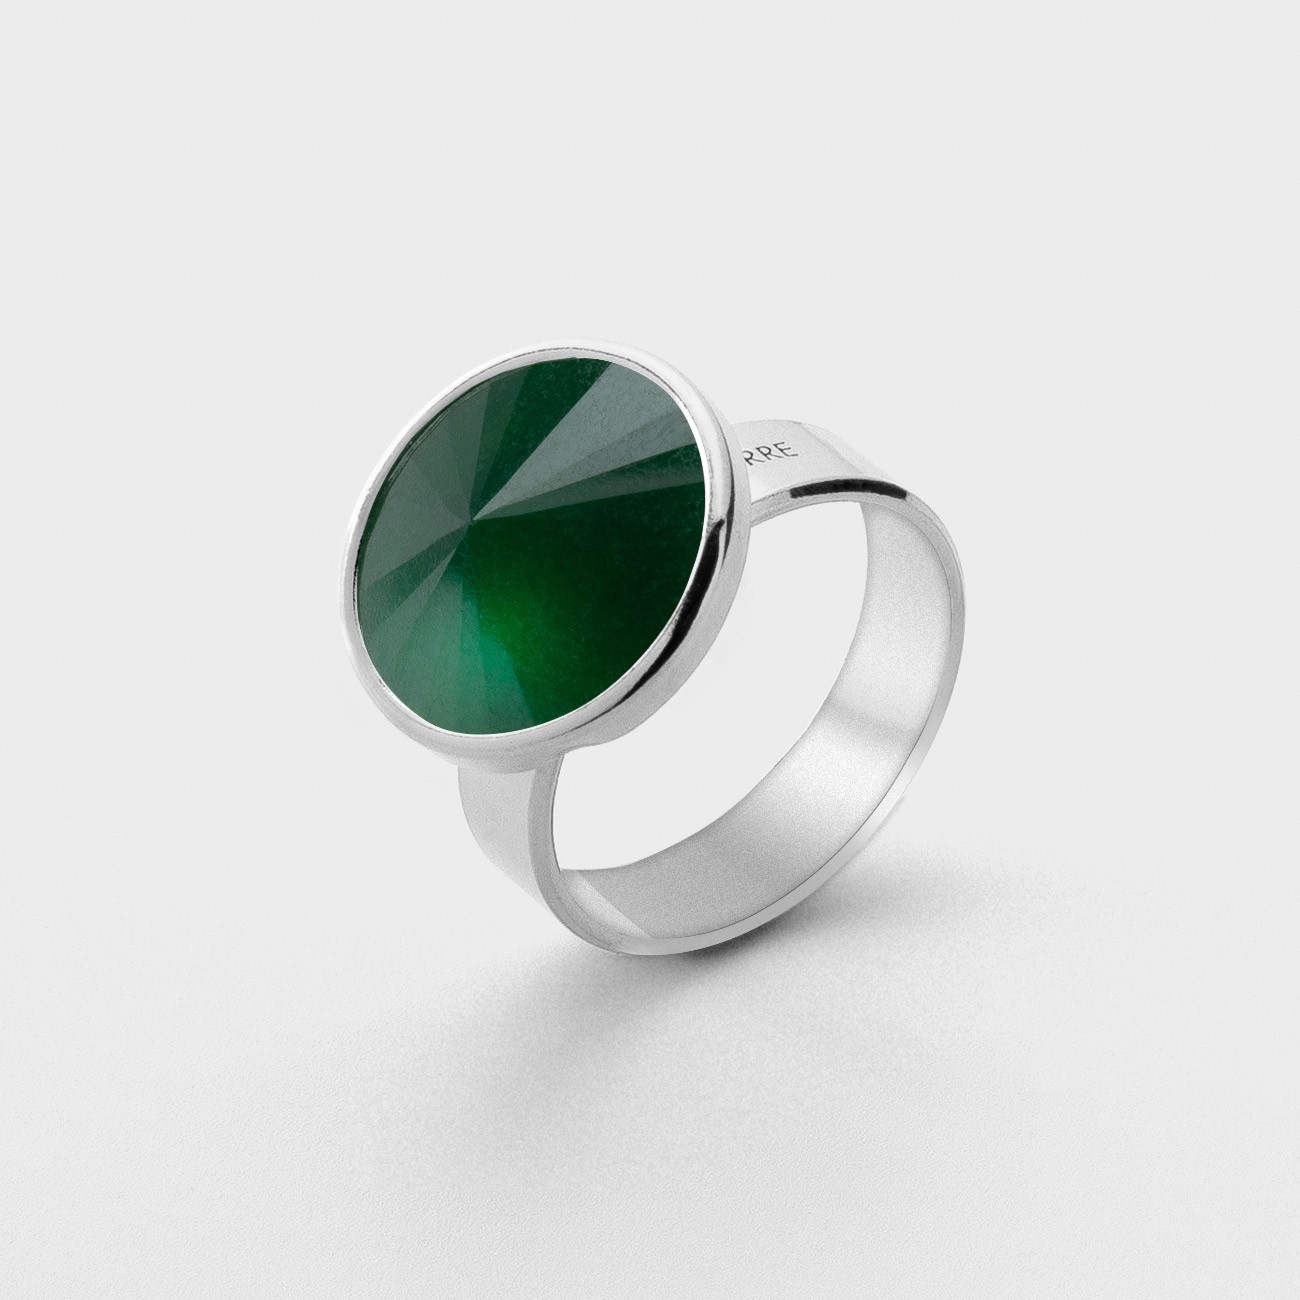 Ring with round natural stone jadeite, 925